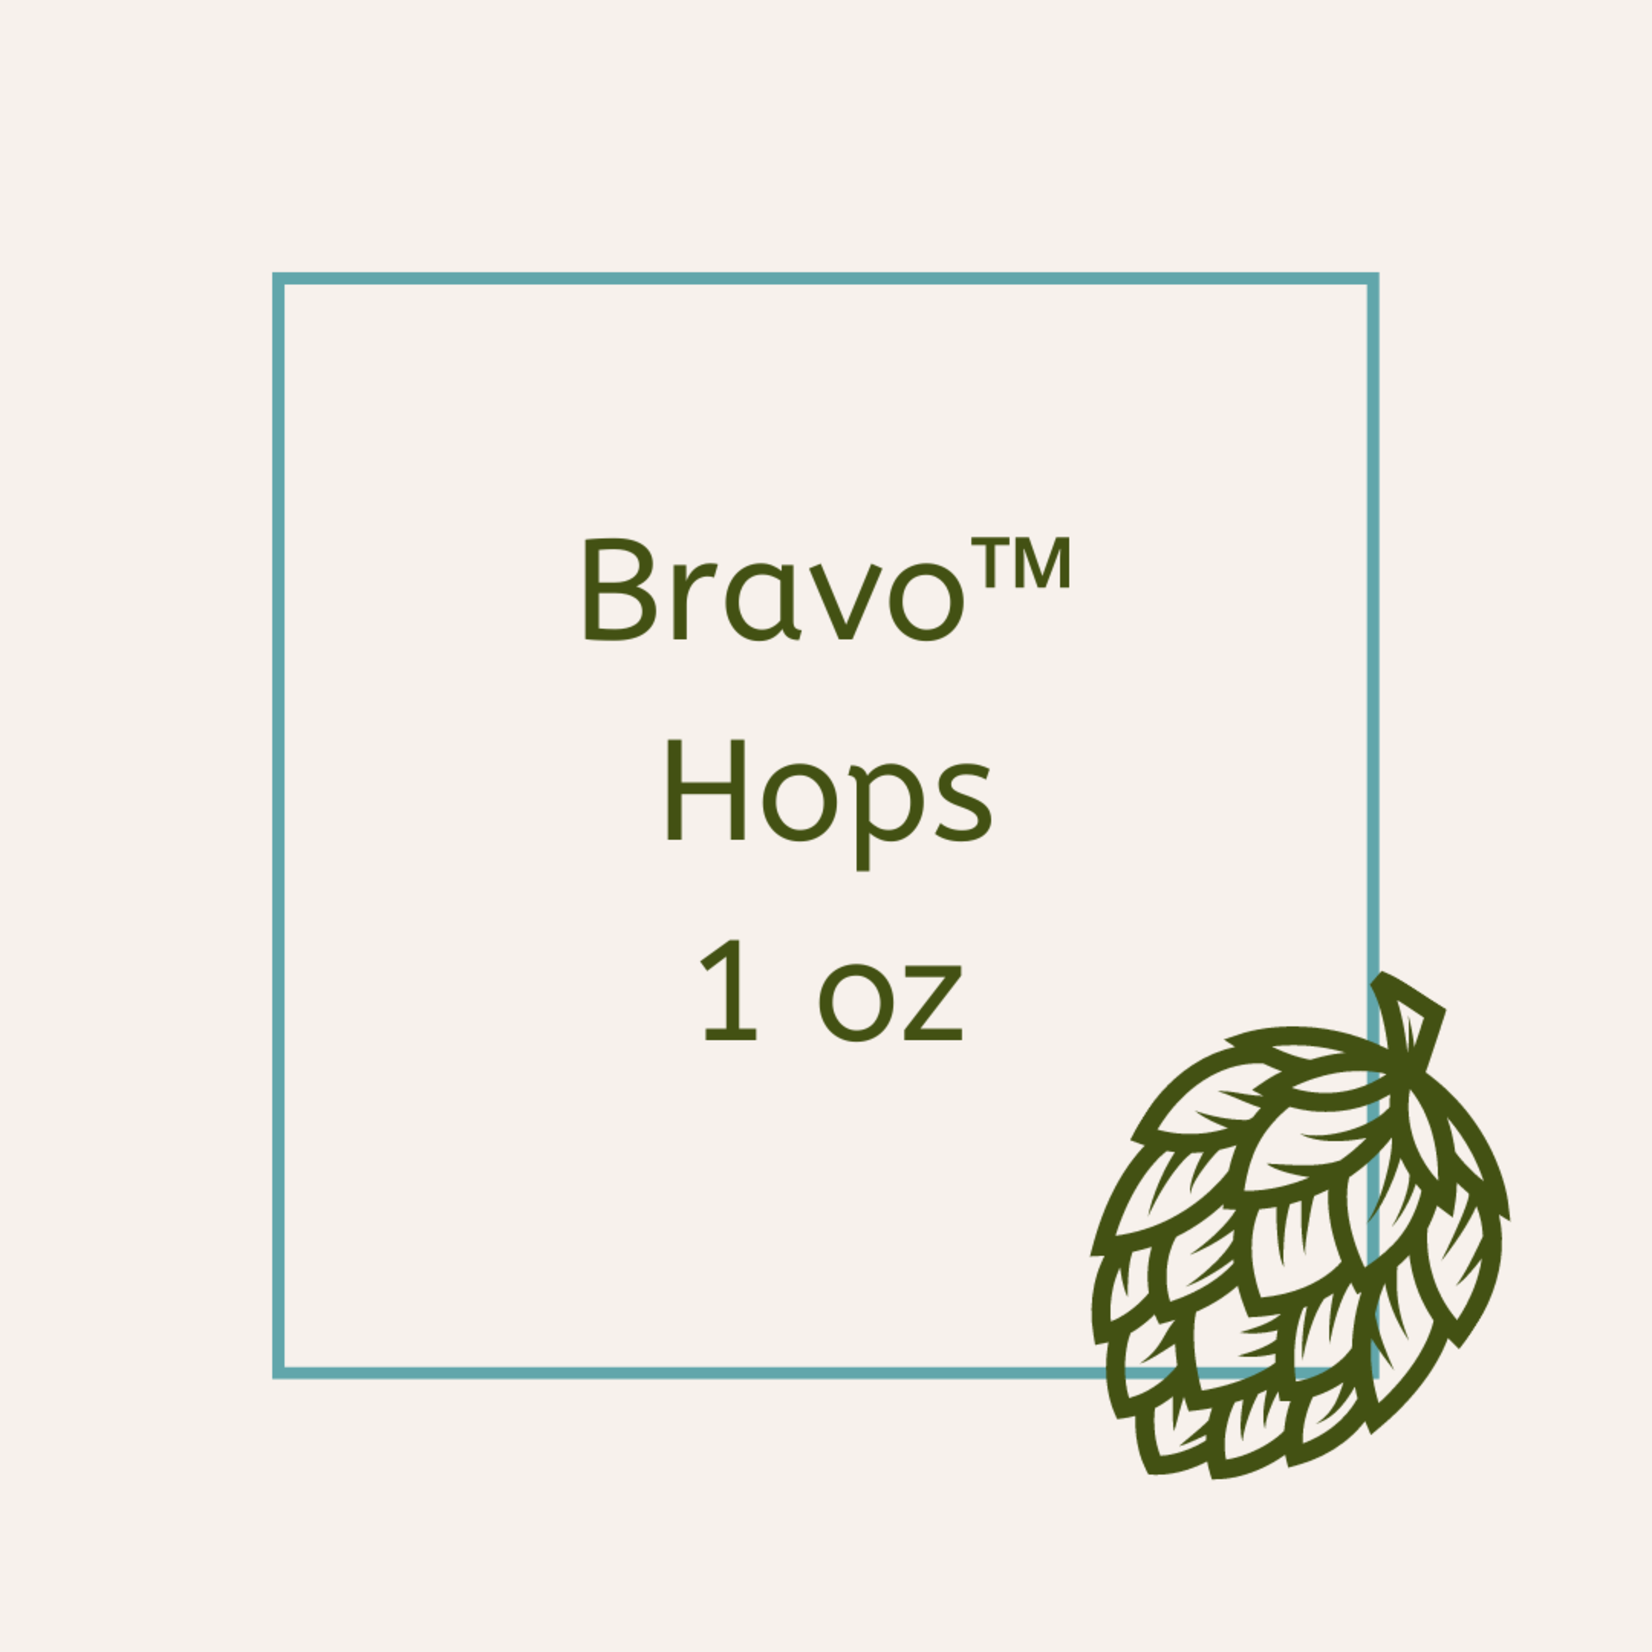 Bravo™ Hops 1 oz